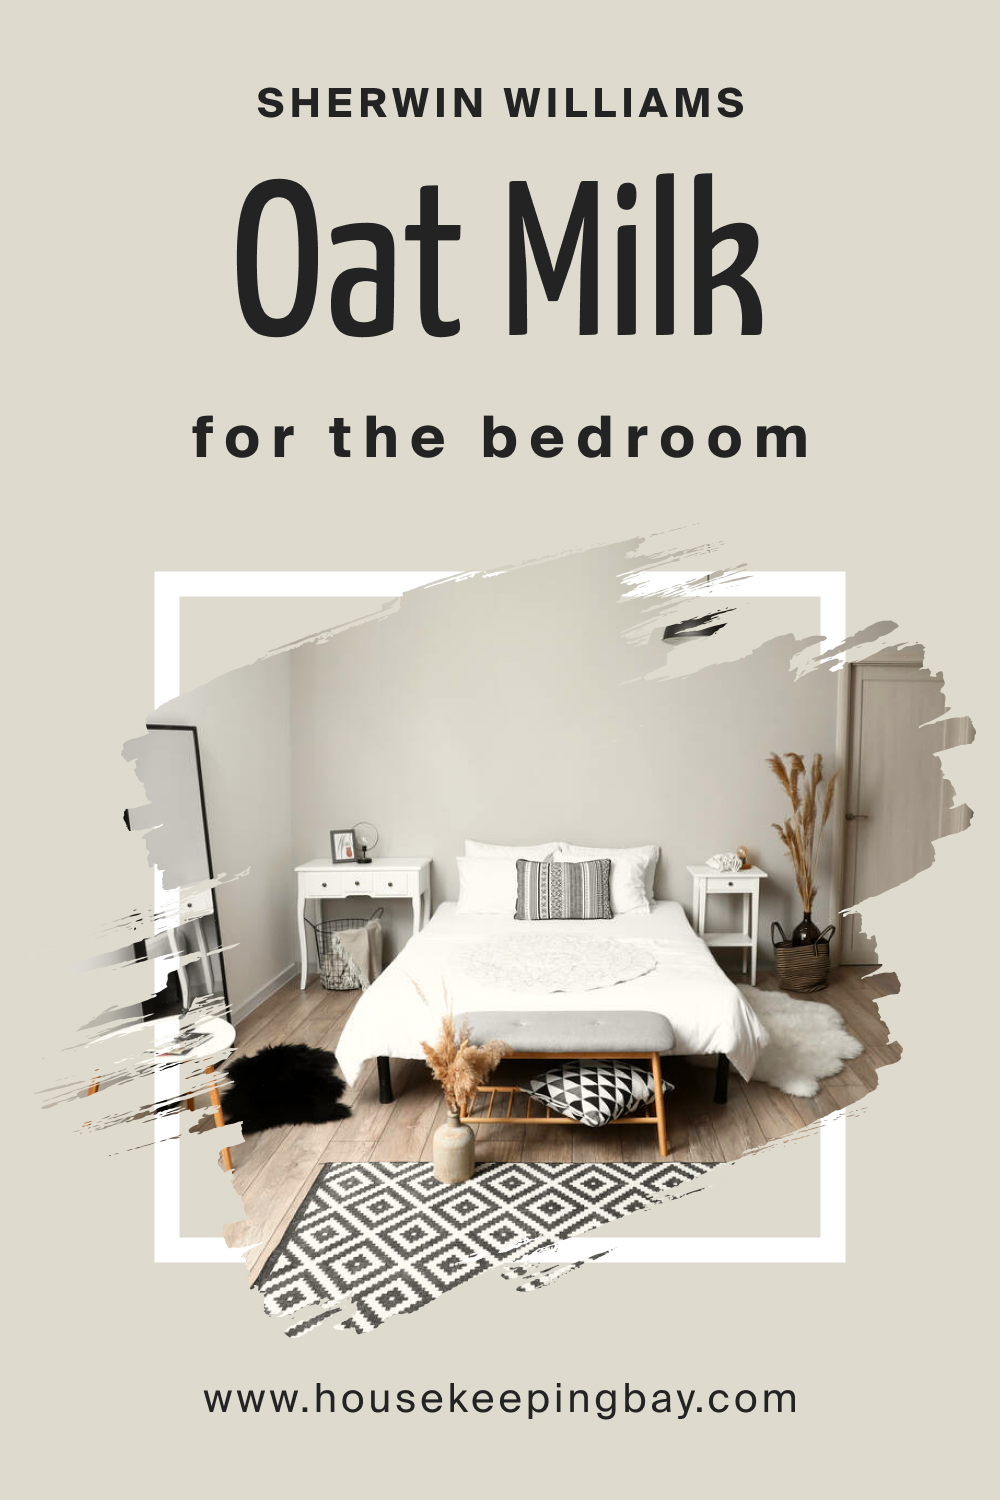 Sherwin Williams. SW 9501 Oat Milk For the bedroom